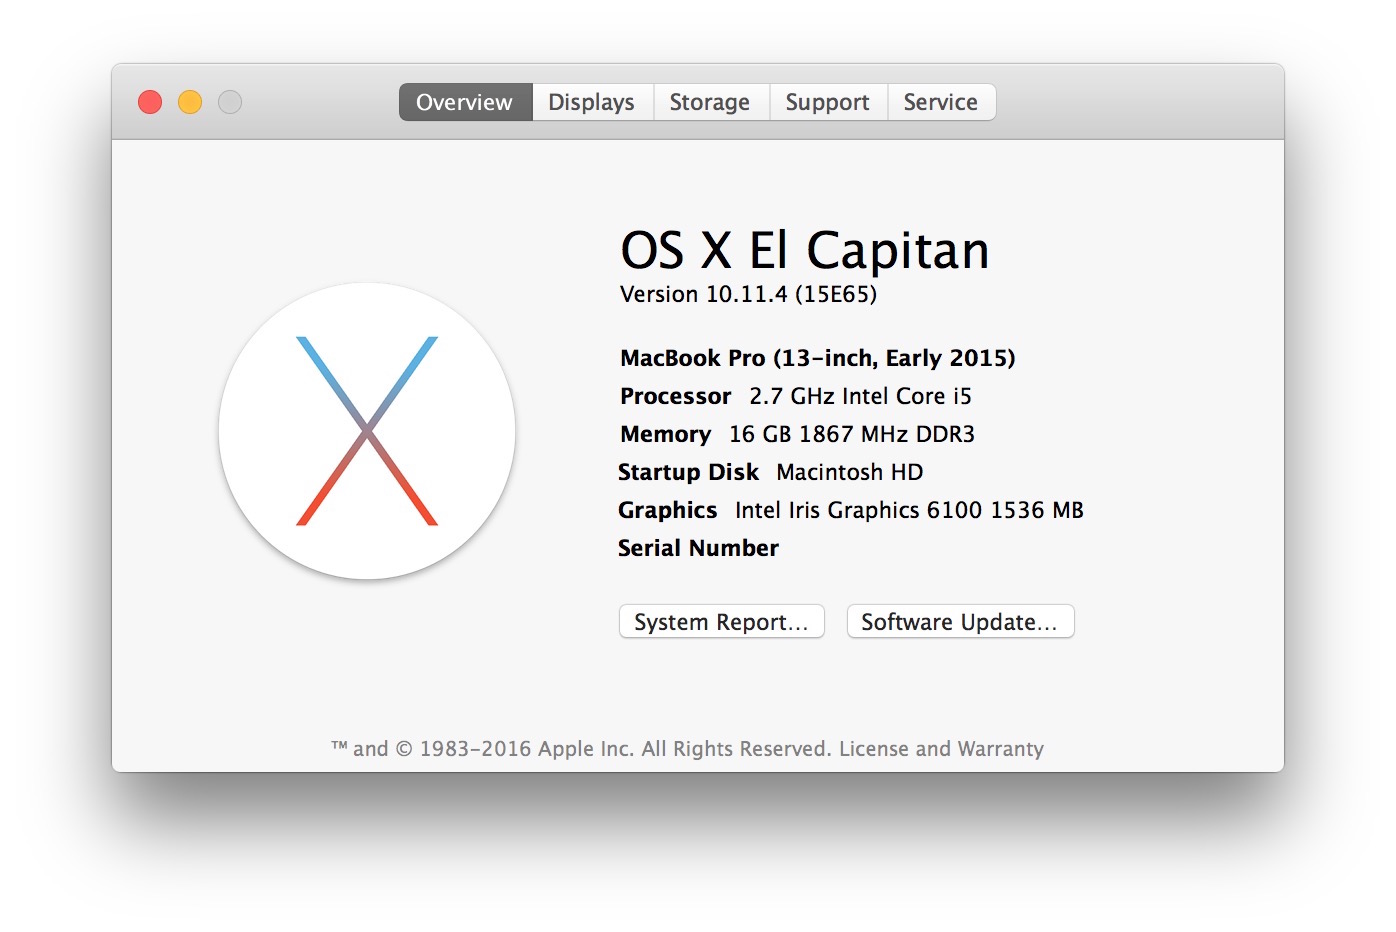 apple configurator 2.3 download for os x el capitan